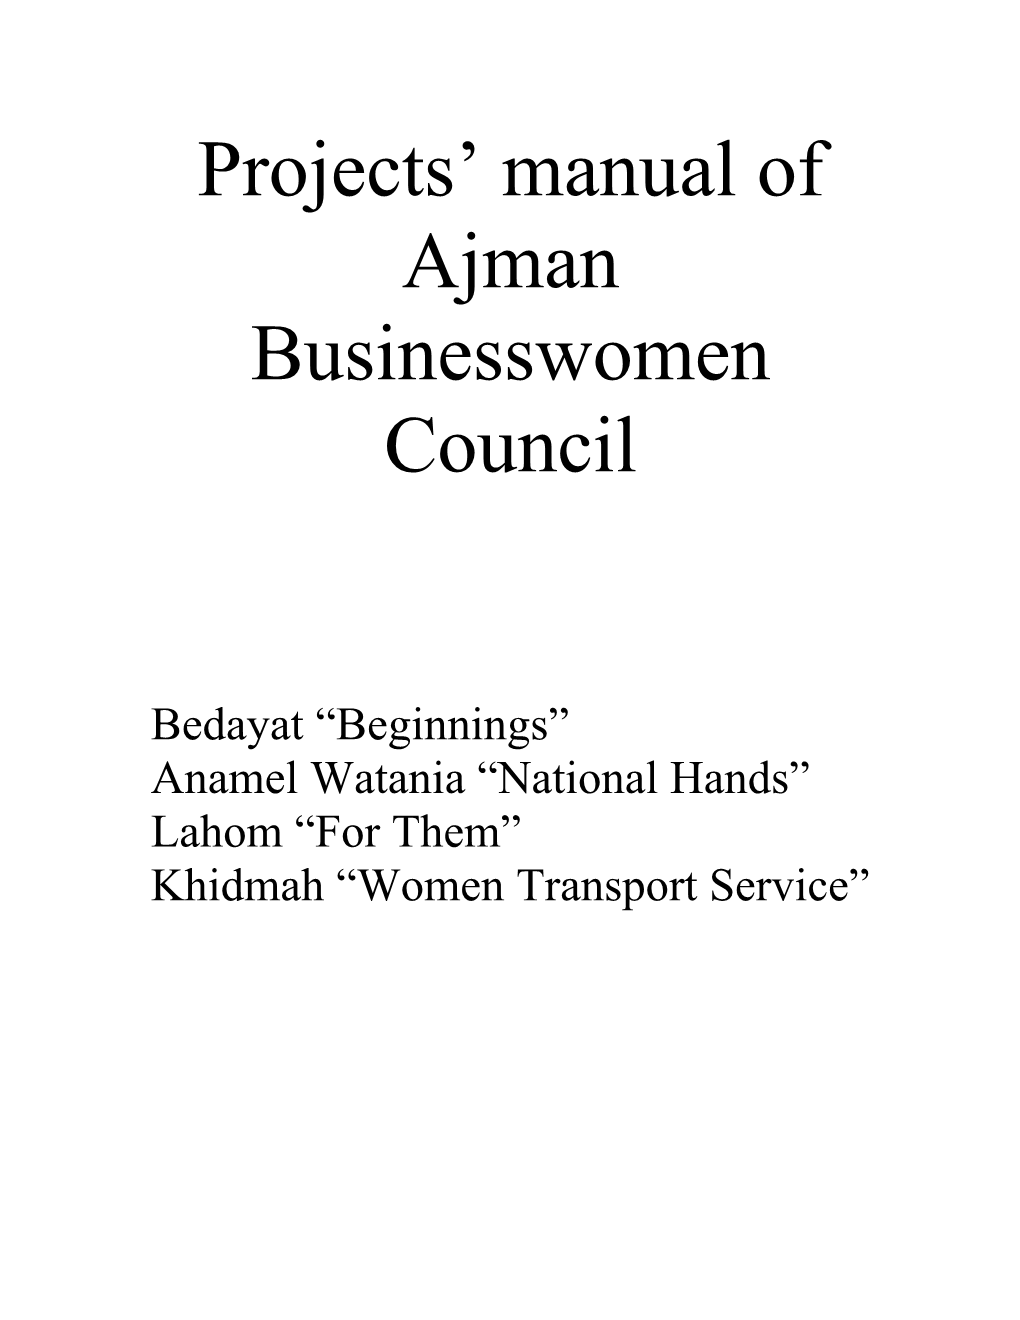 Projects Manual of Ajman Businesswomen Council